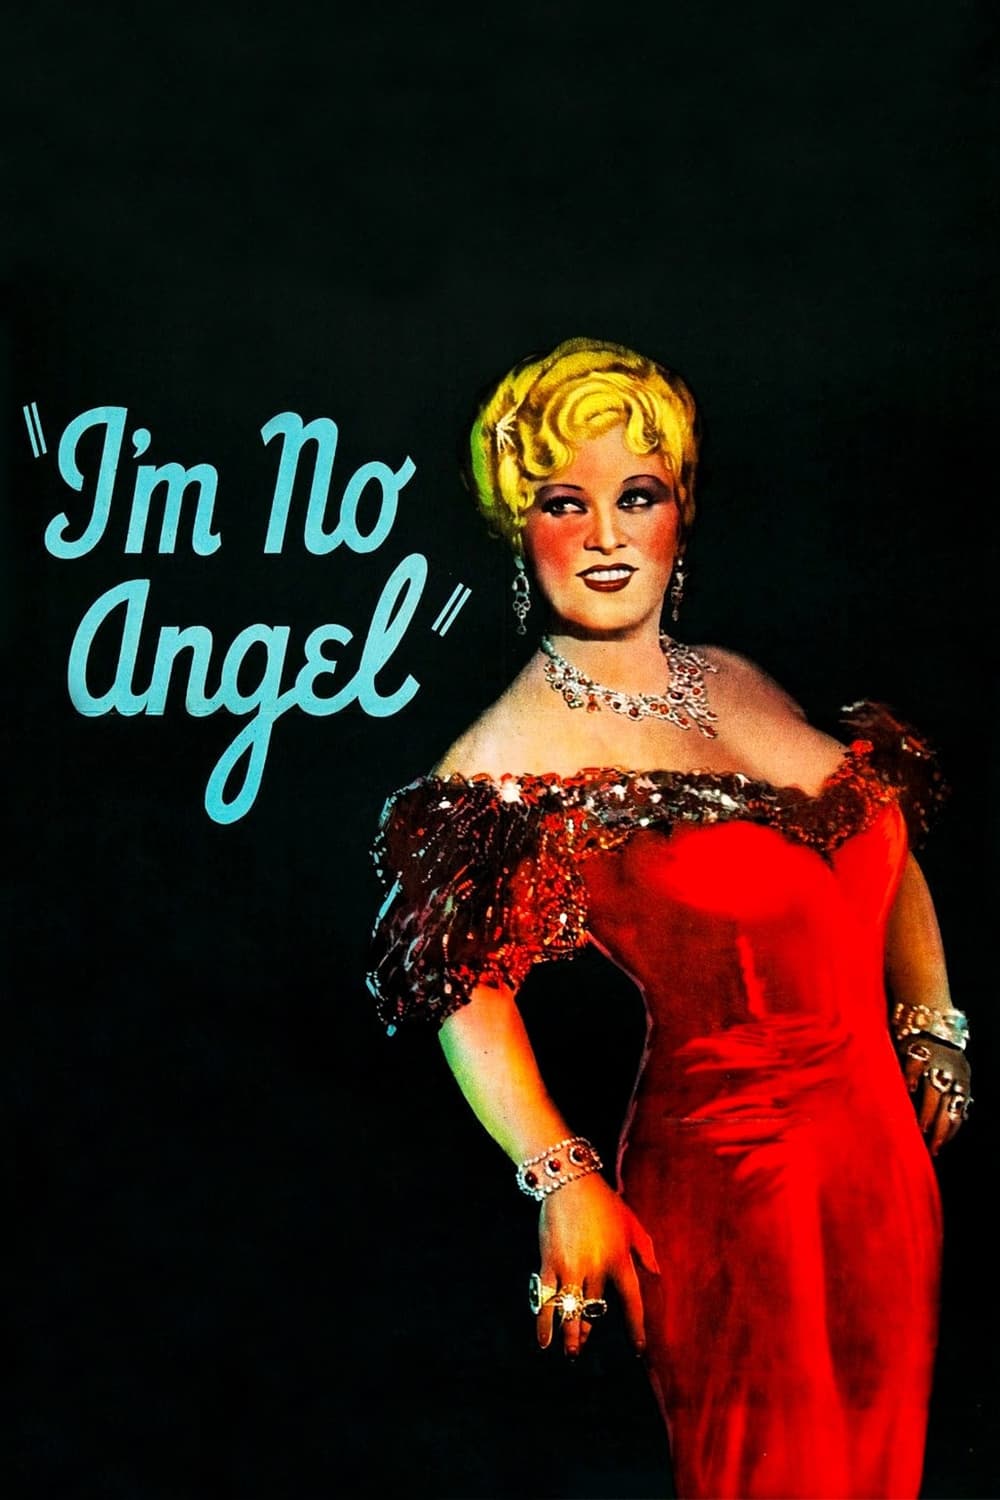 No soy ningún angel